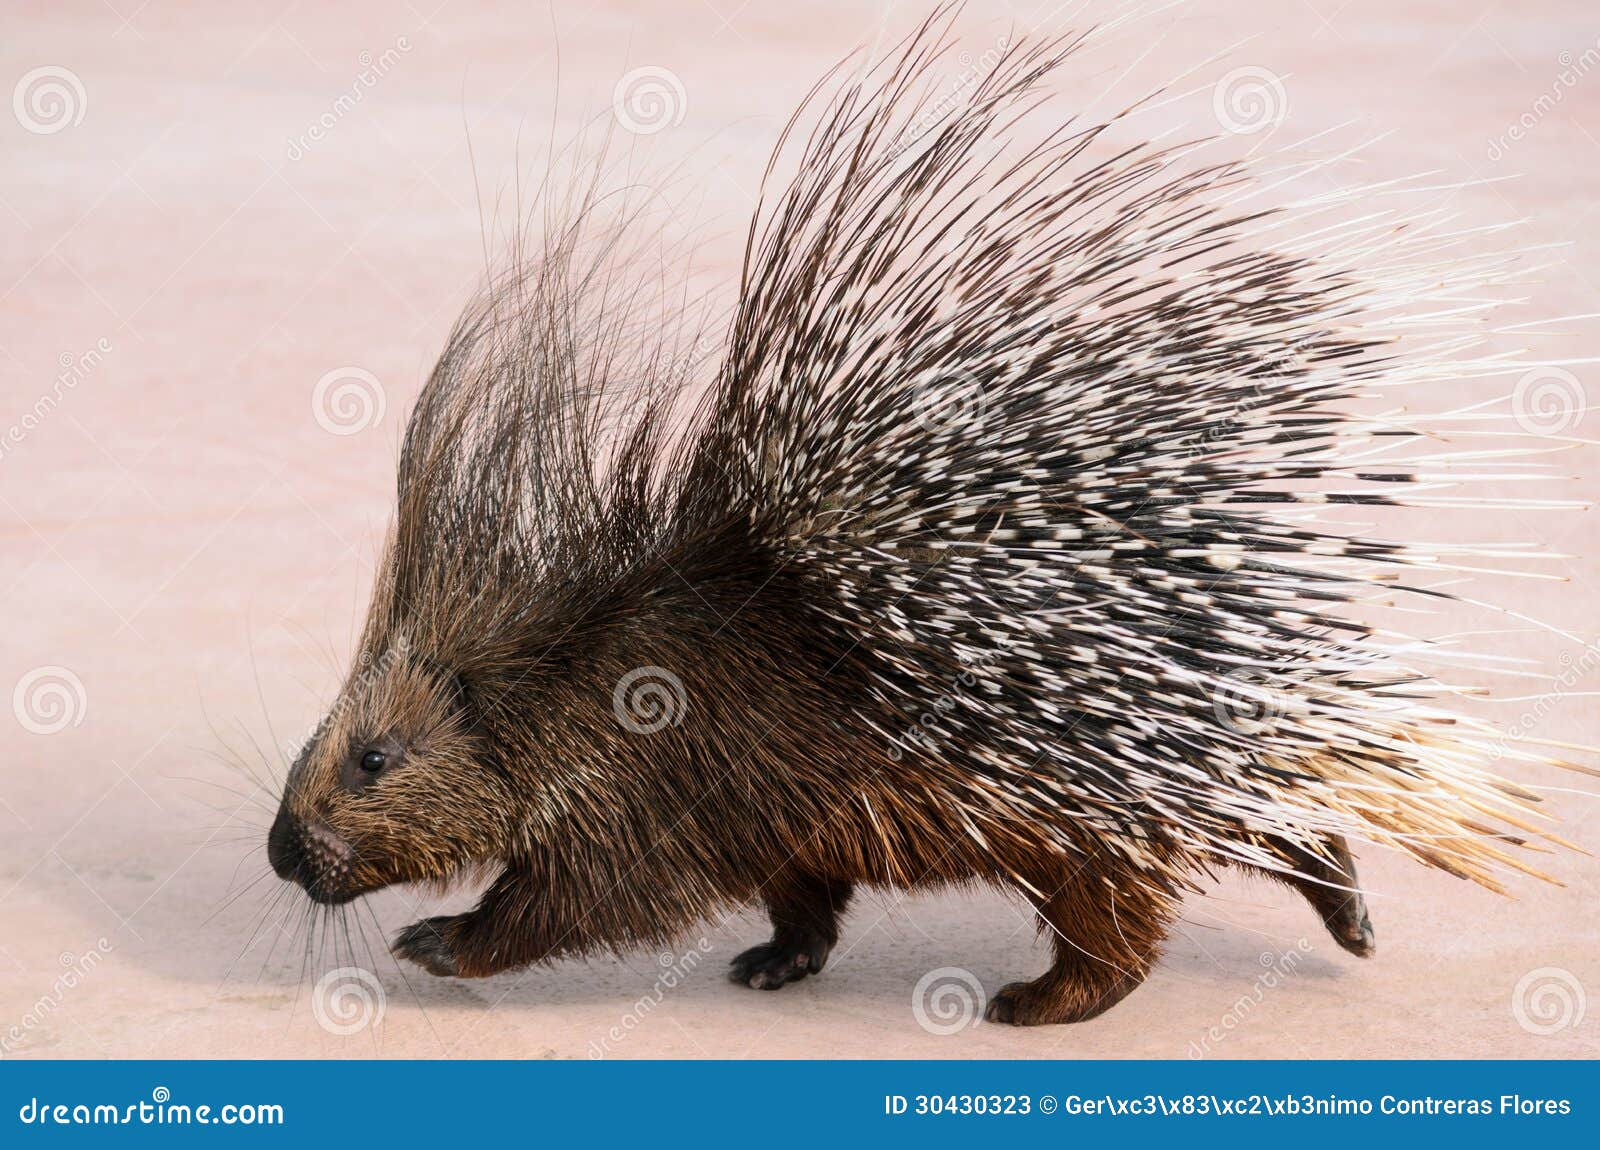 porcupine walking